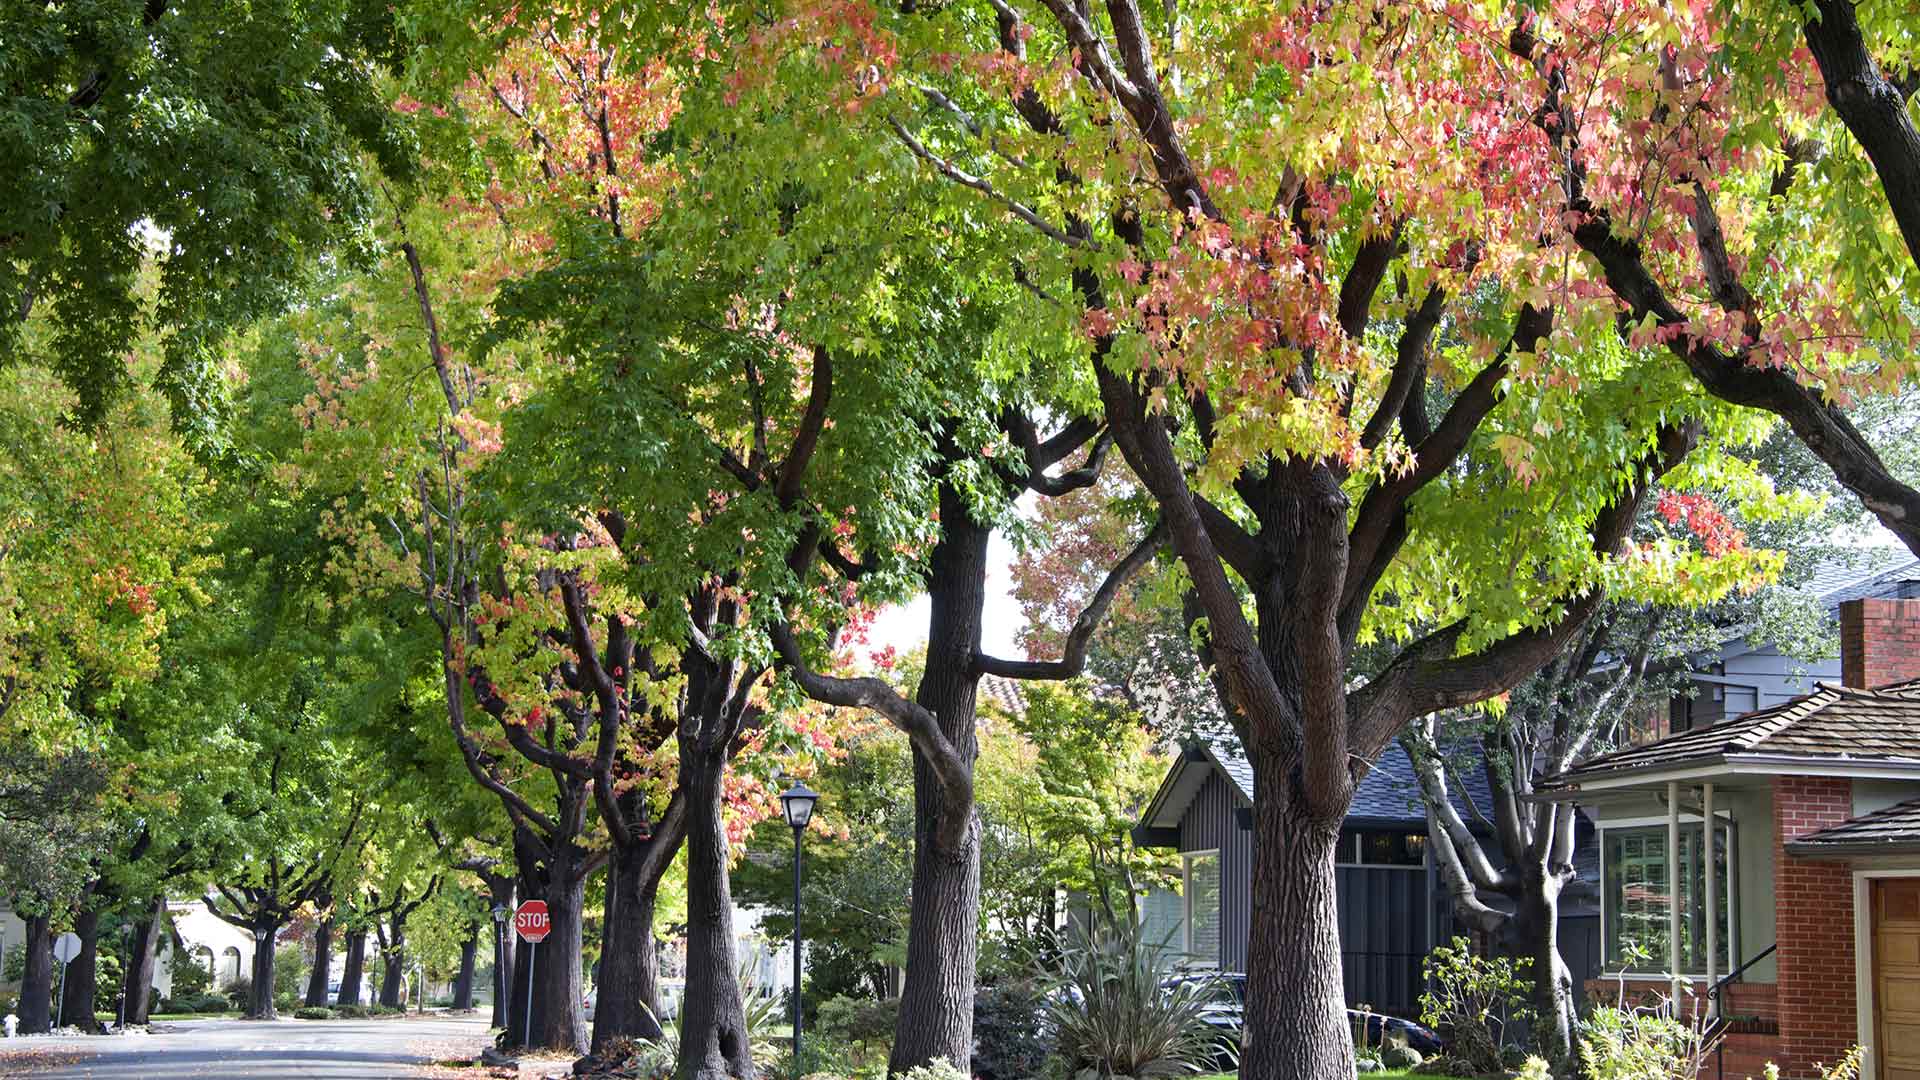 Foliage of a neighborhood street in Grand Chute, WI.